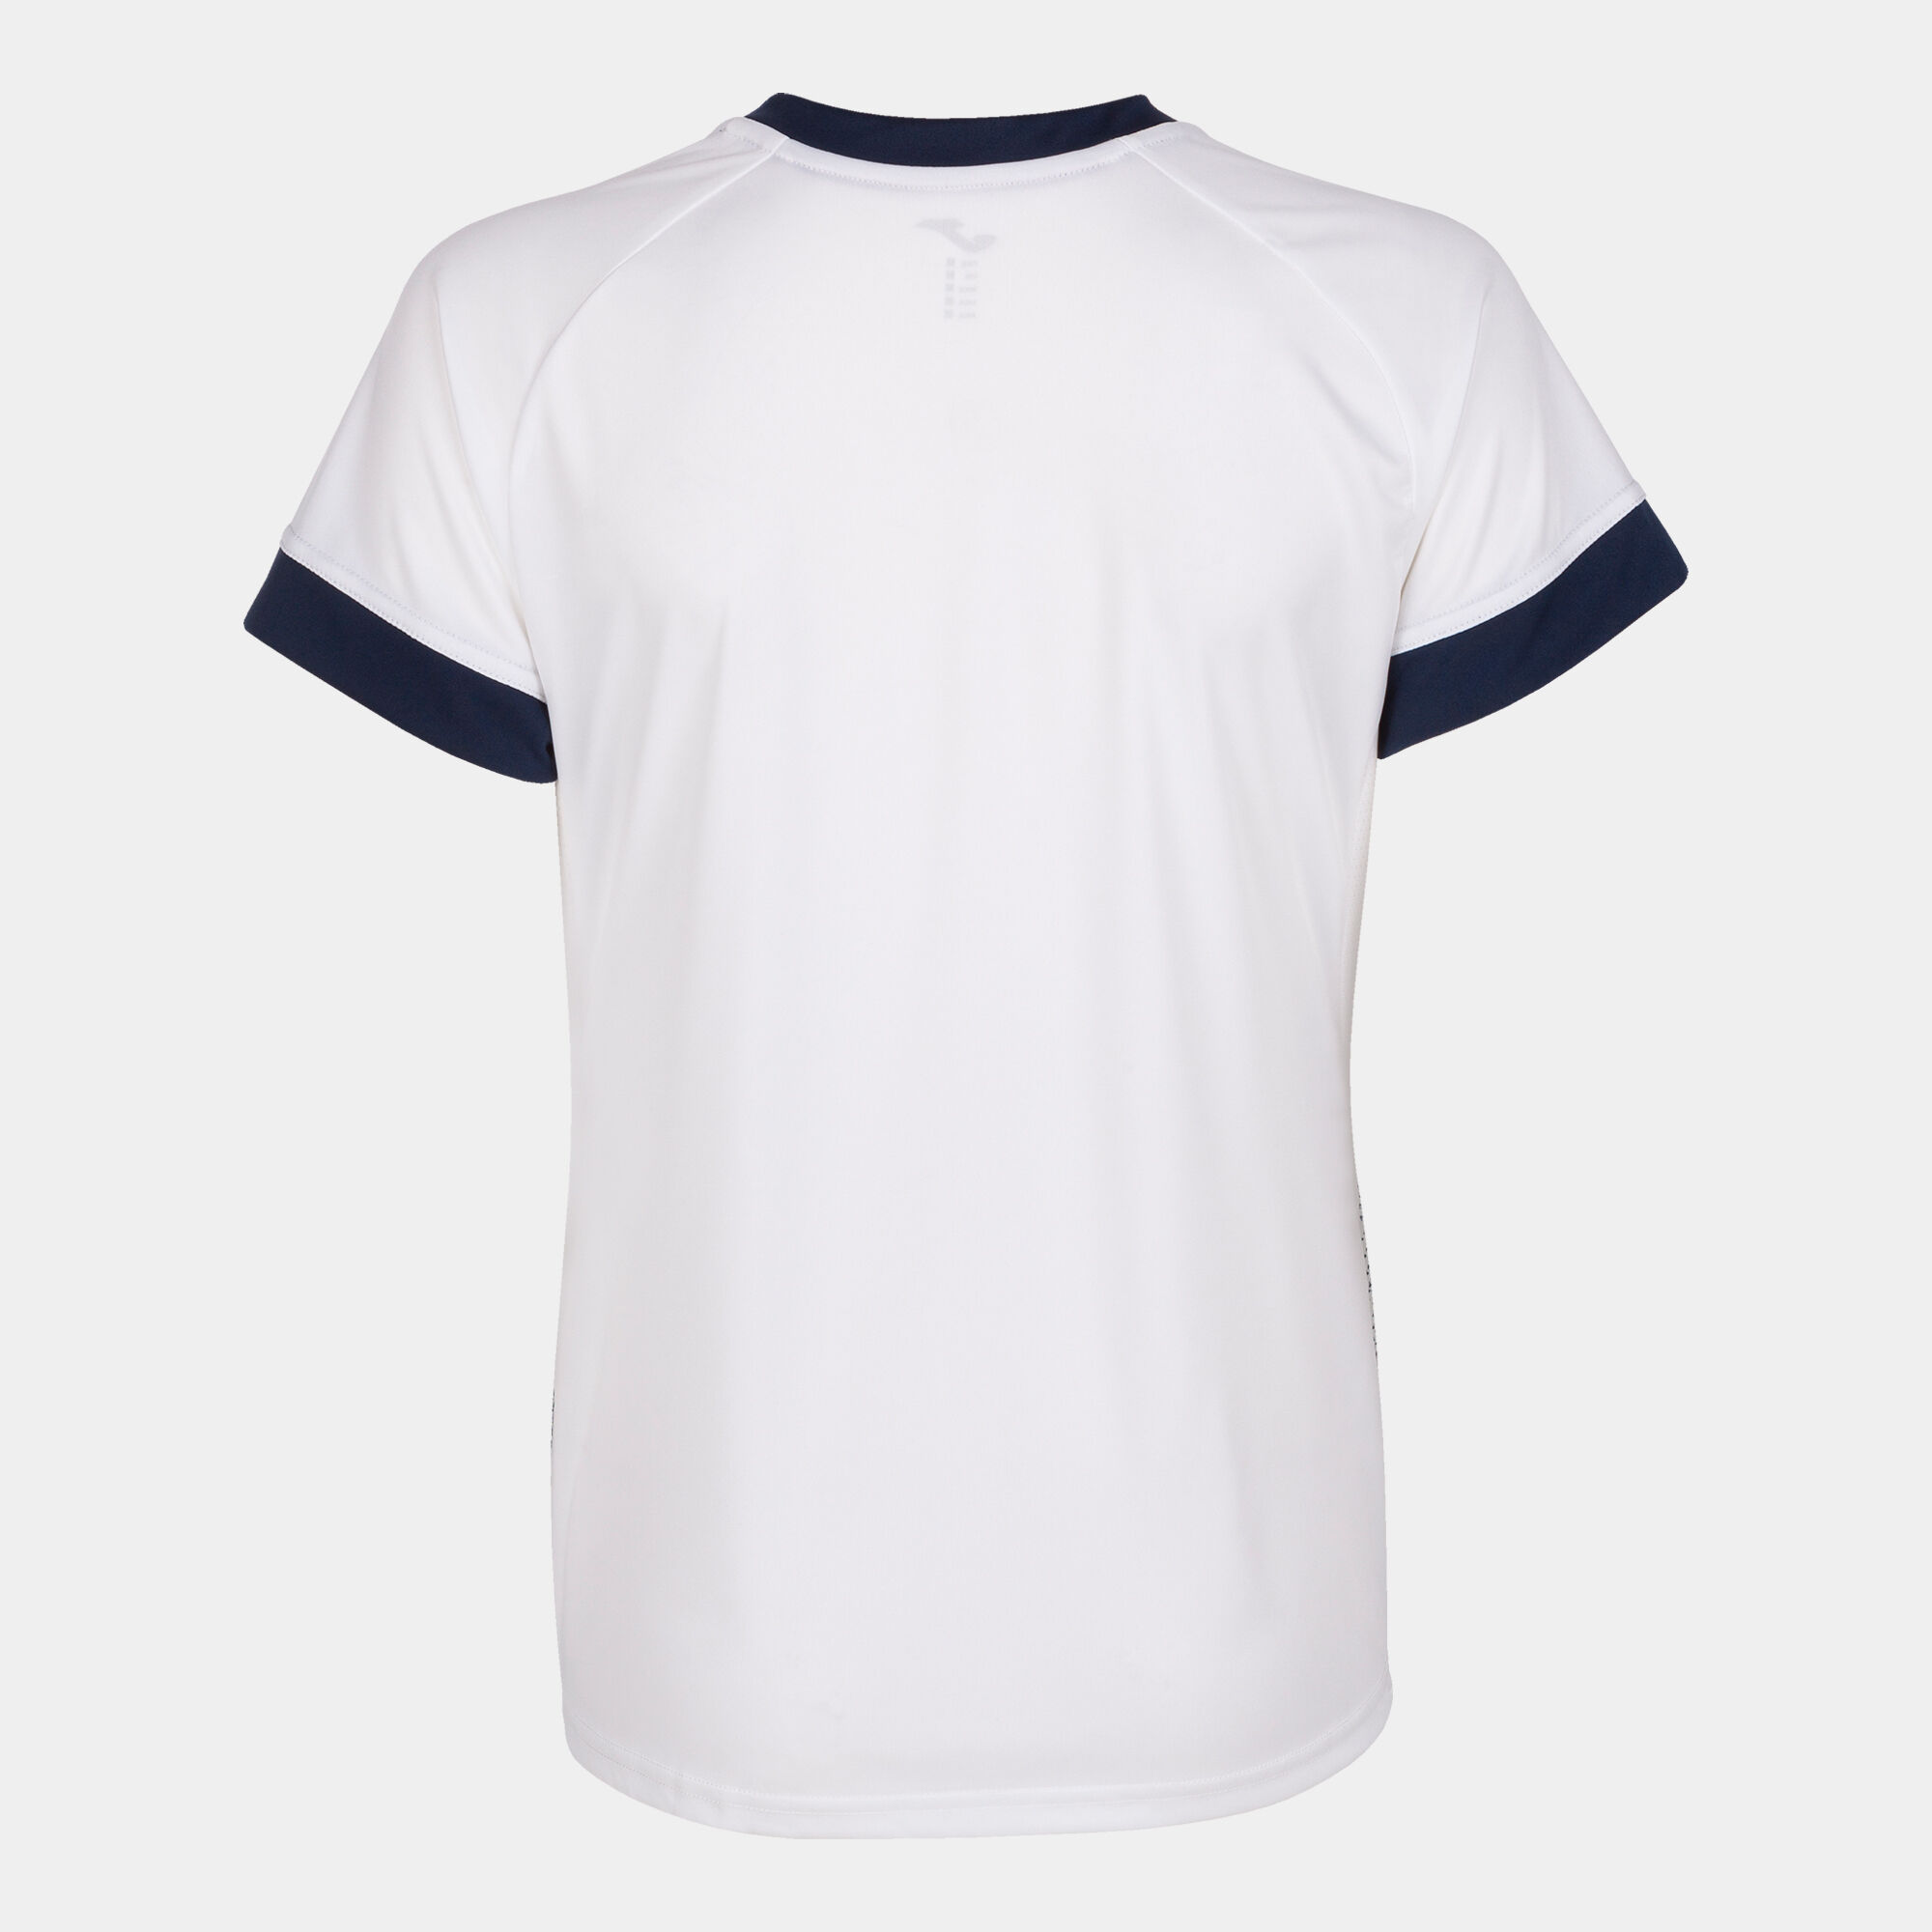 T-shirt manga curta mulher Supernova III branco azul marinho